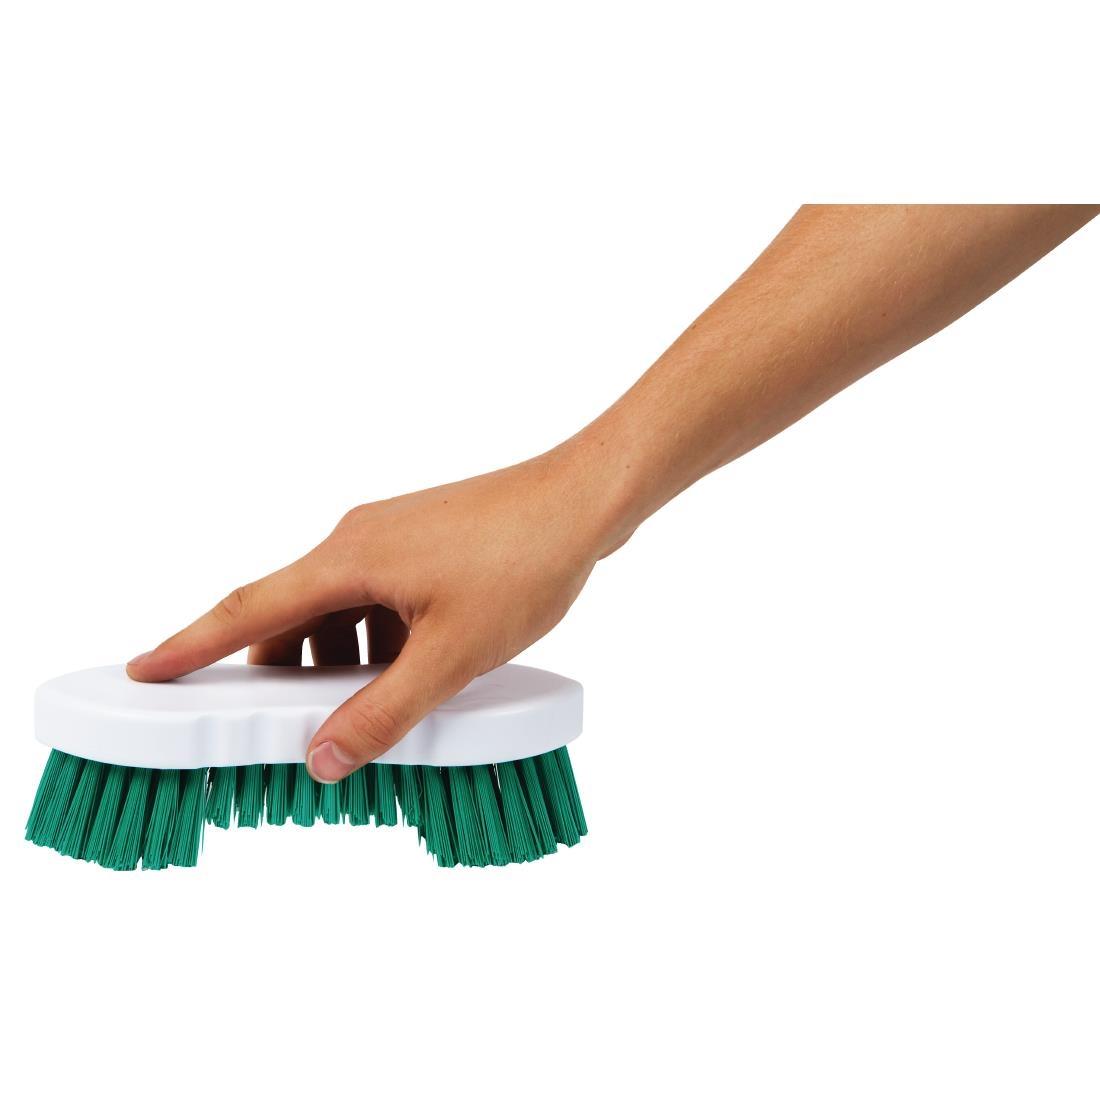 Jantex Scrub Brush Green - L720  - 3